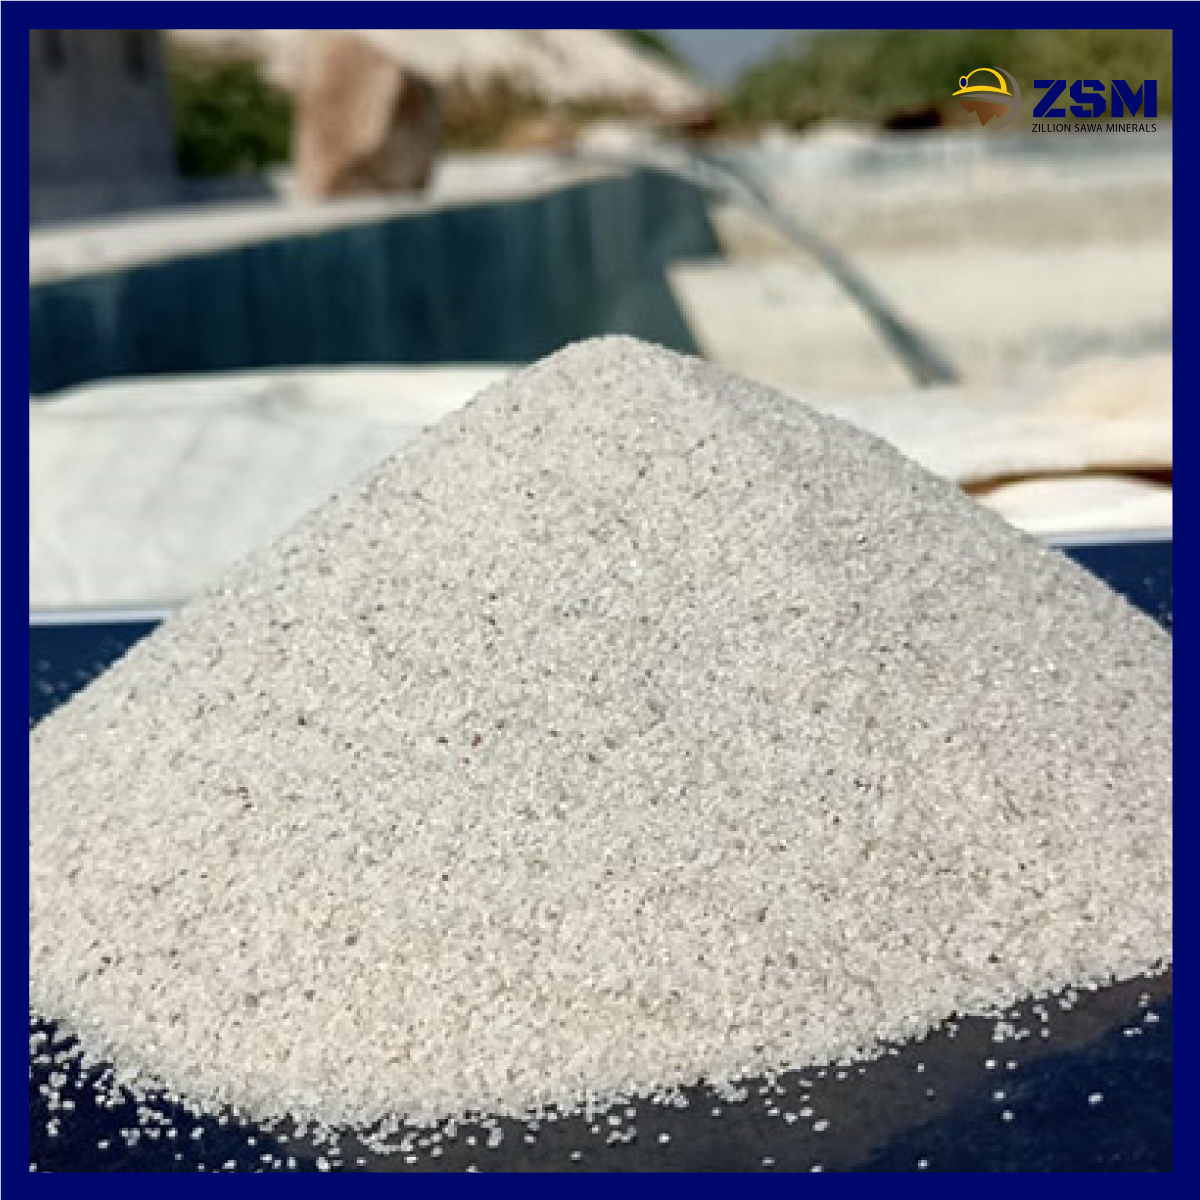 Silica Sand Products, High Purity Quartz Sand, low Iron Silica Powder